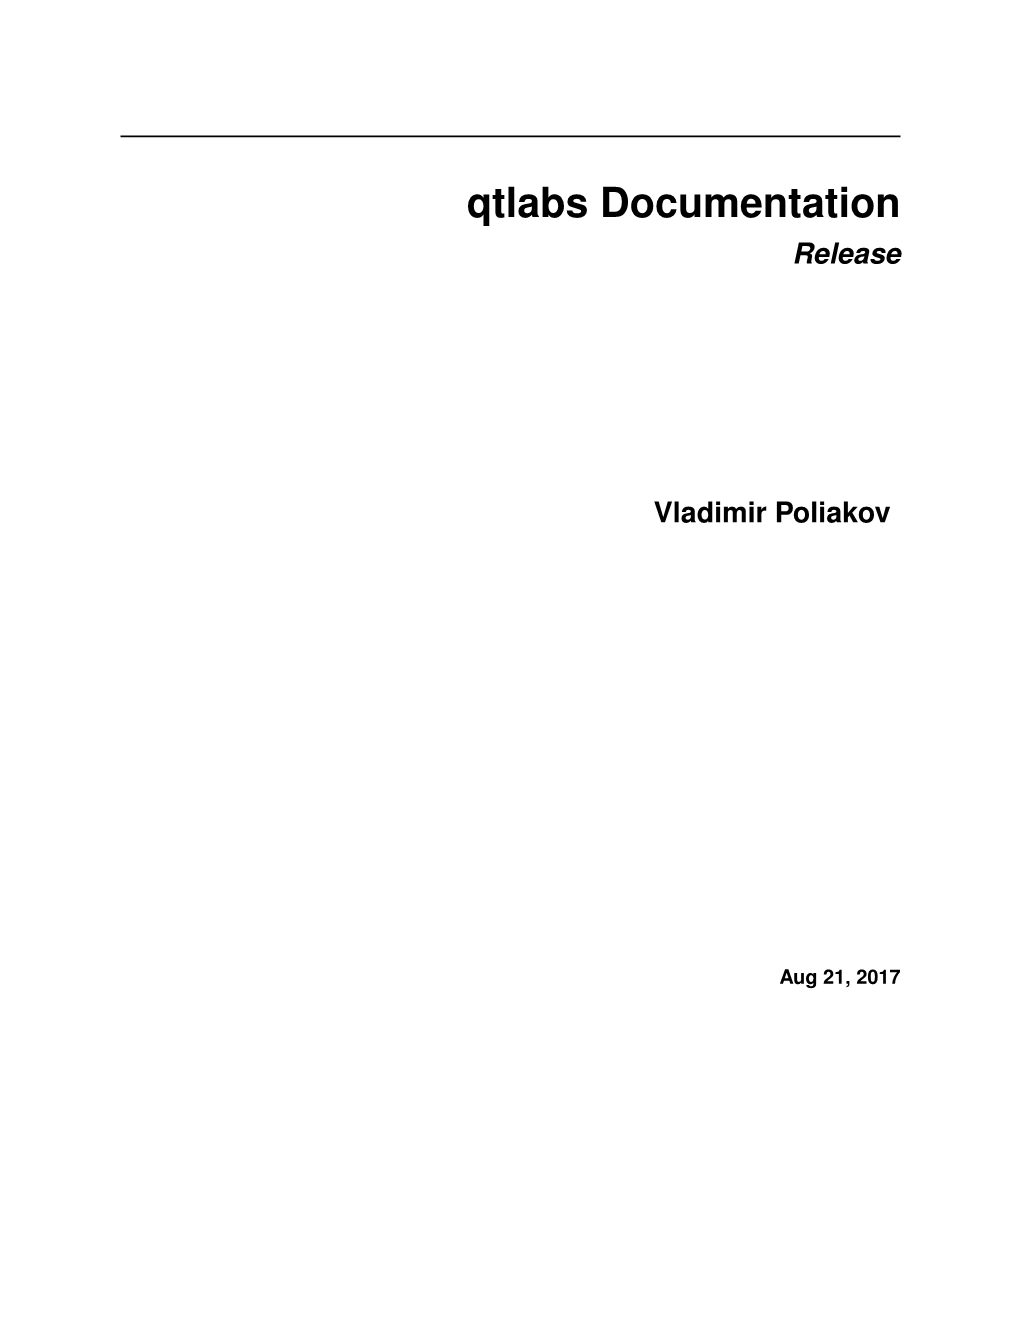 Qtlabs Documentation Release